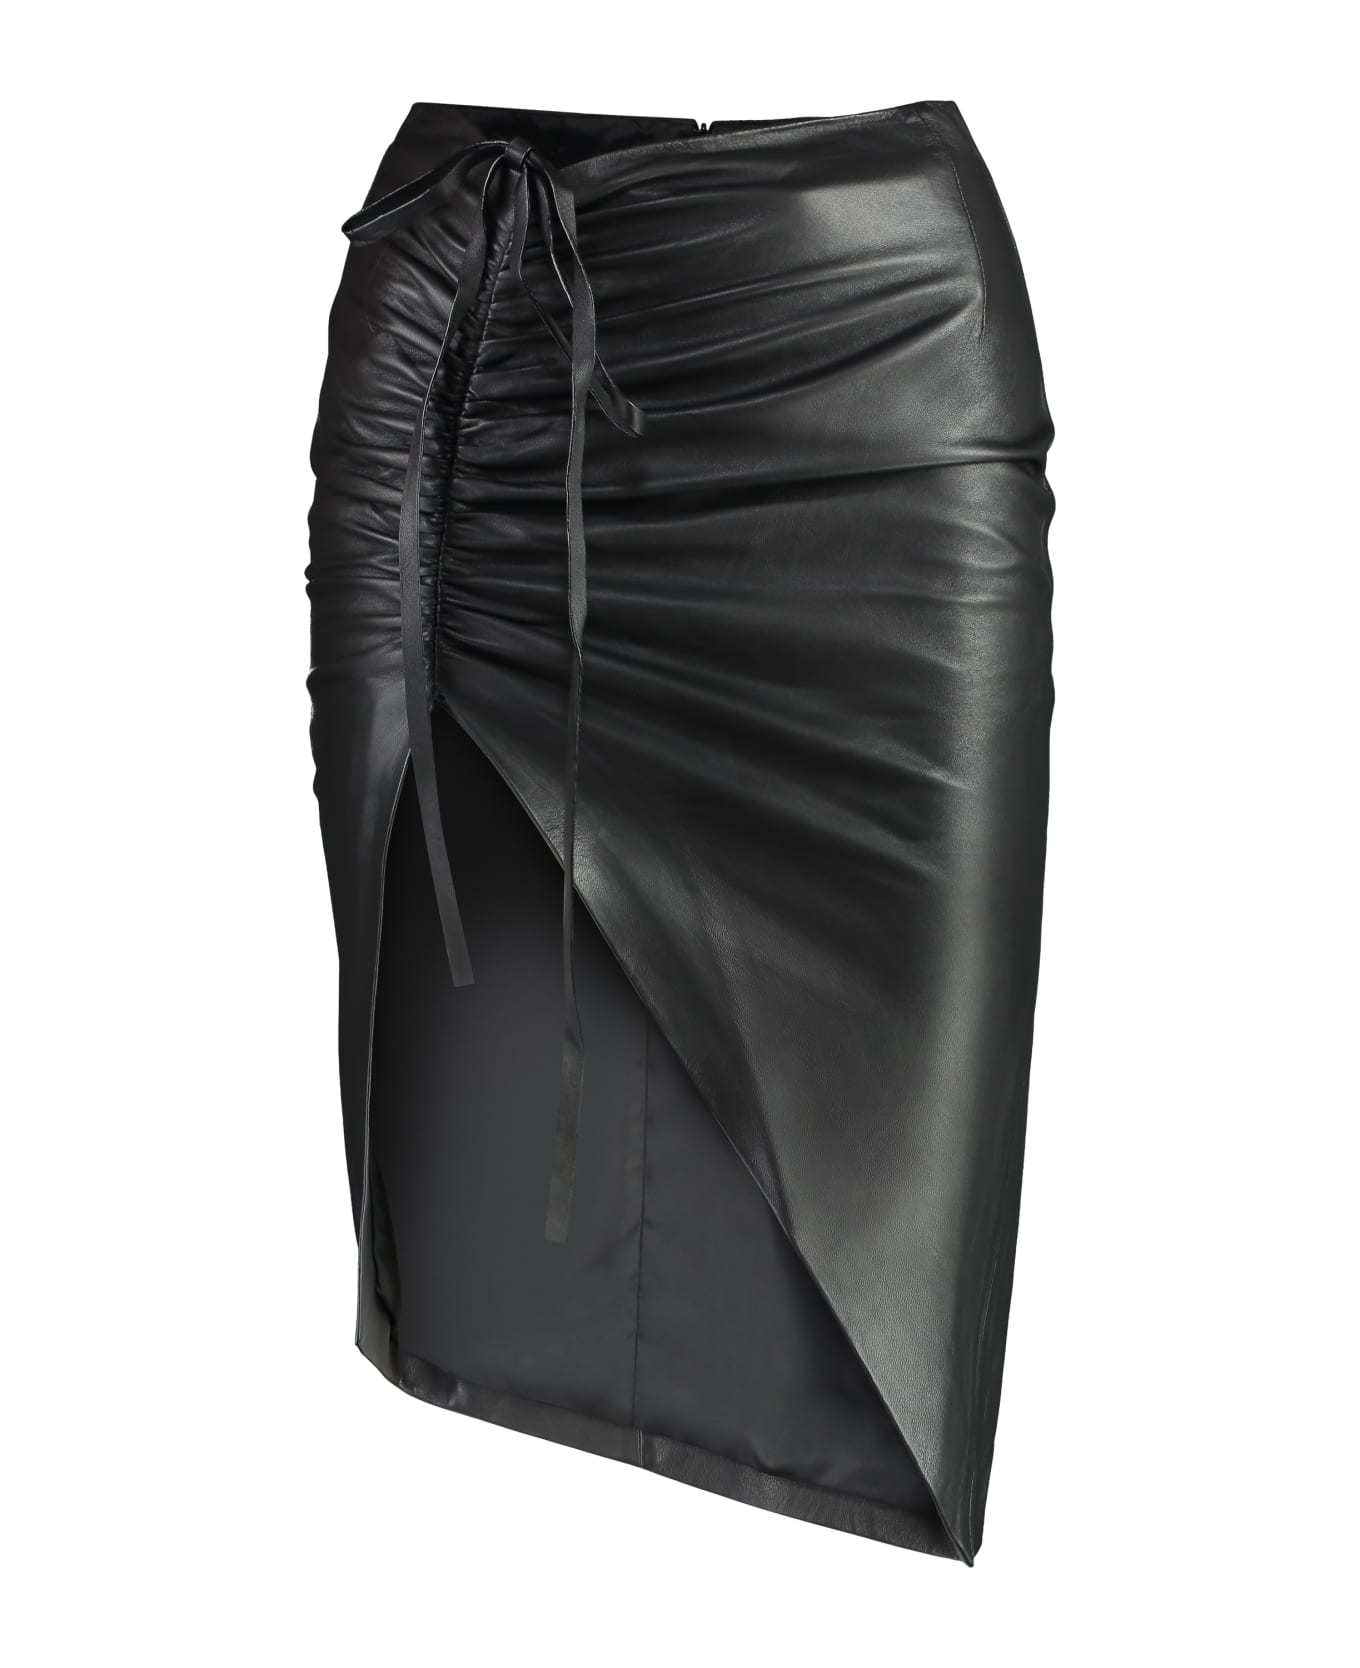 ANDREĀDAMO Leather Skirt - black